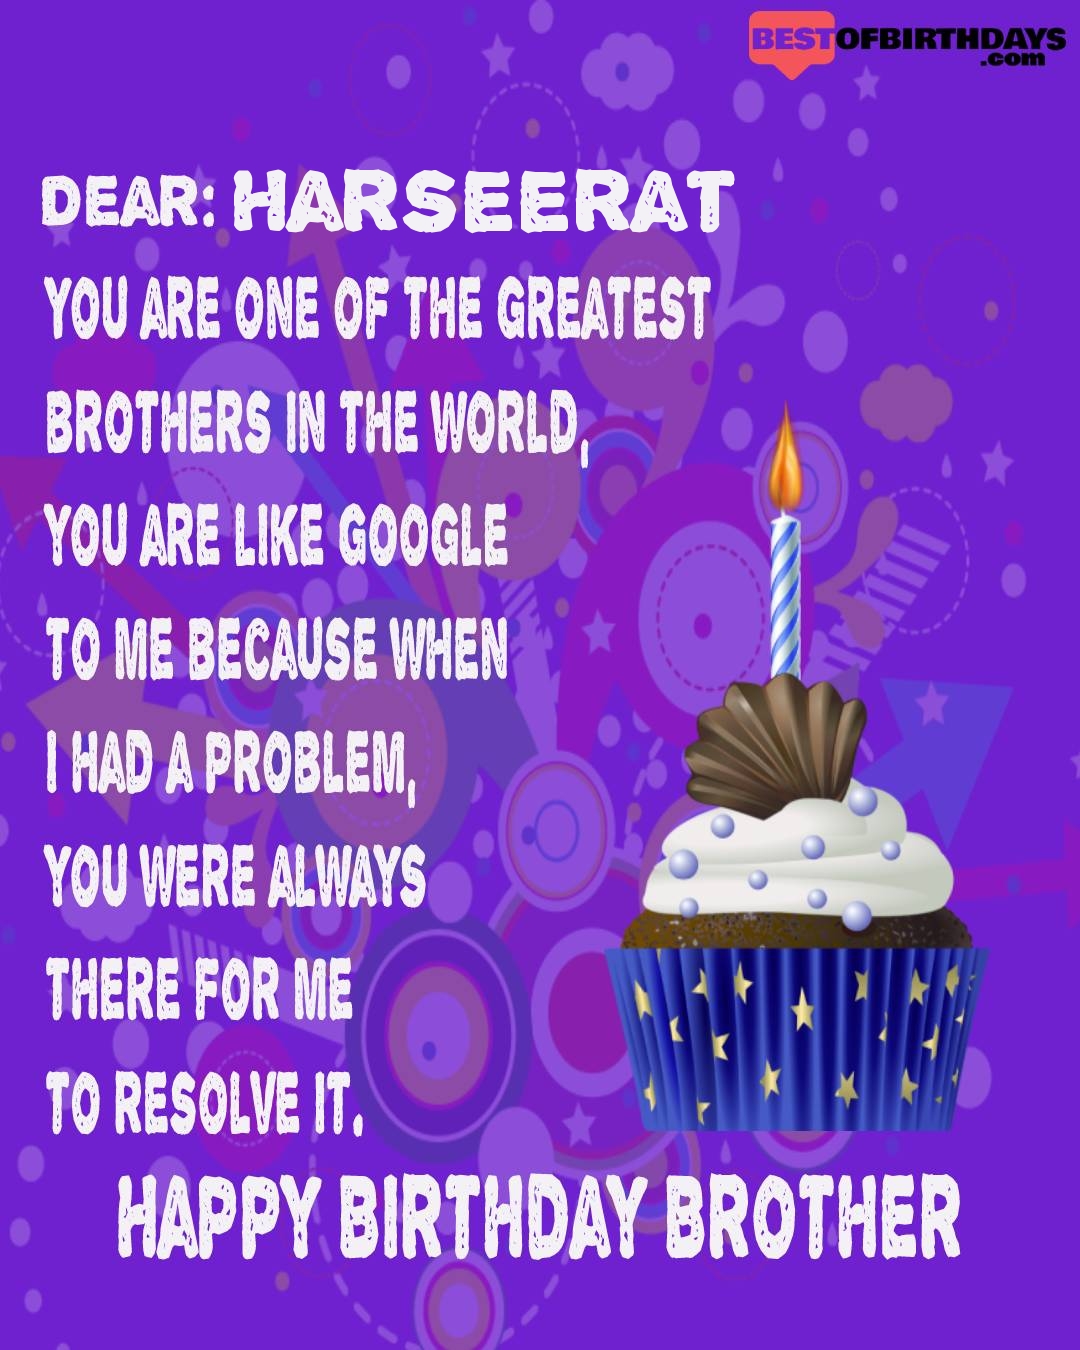 Happy birthday harseerat bhai brother bro